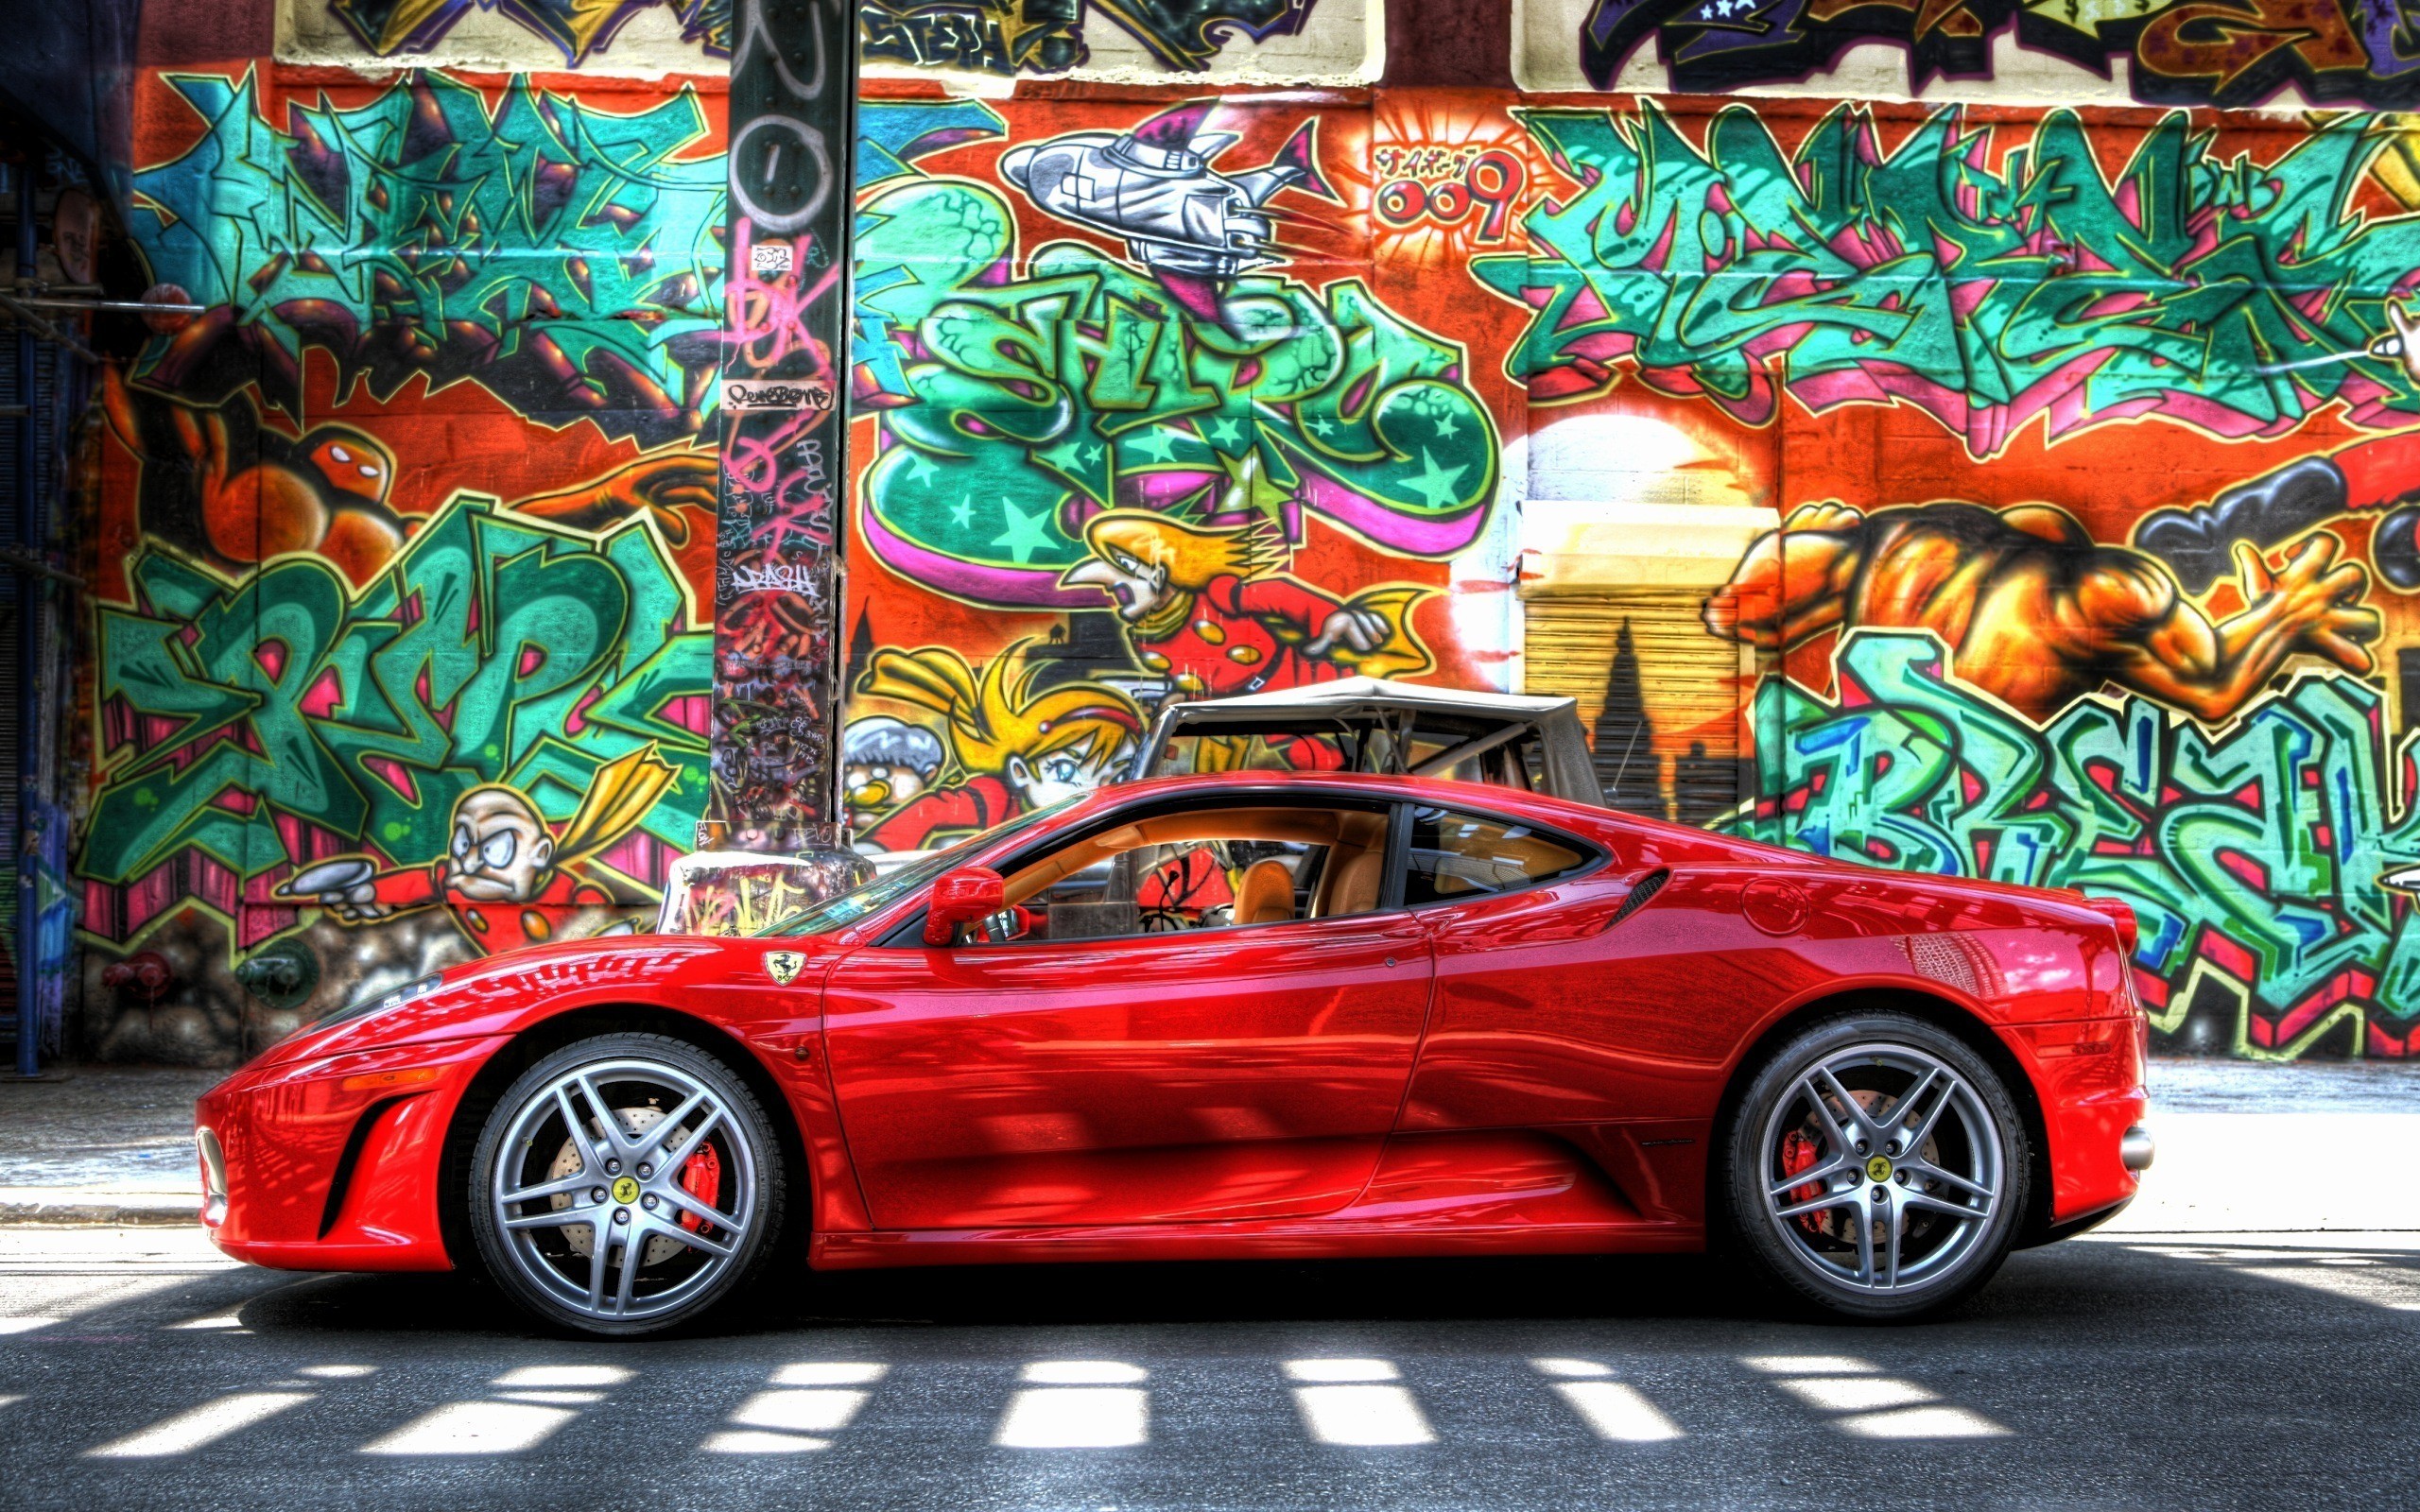 General 2560x1600 car Ferrari sports car red cars coupe colorful vehicle graffiti urban italian cars Stellantis